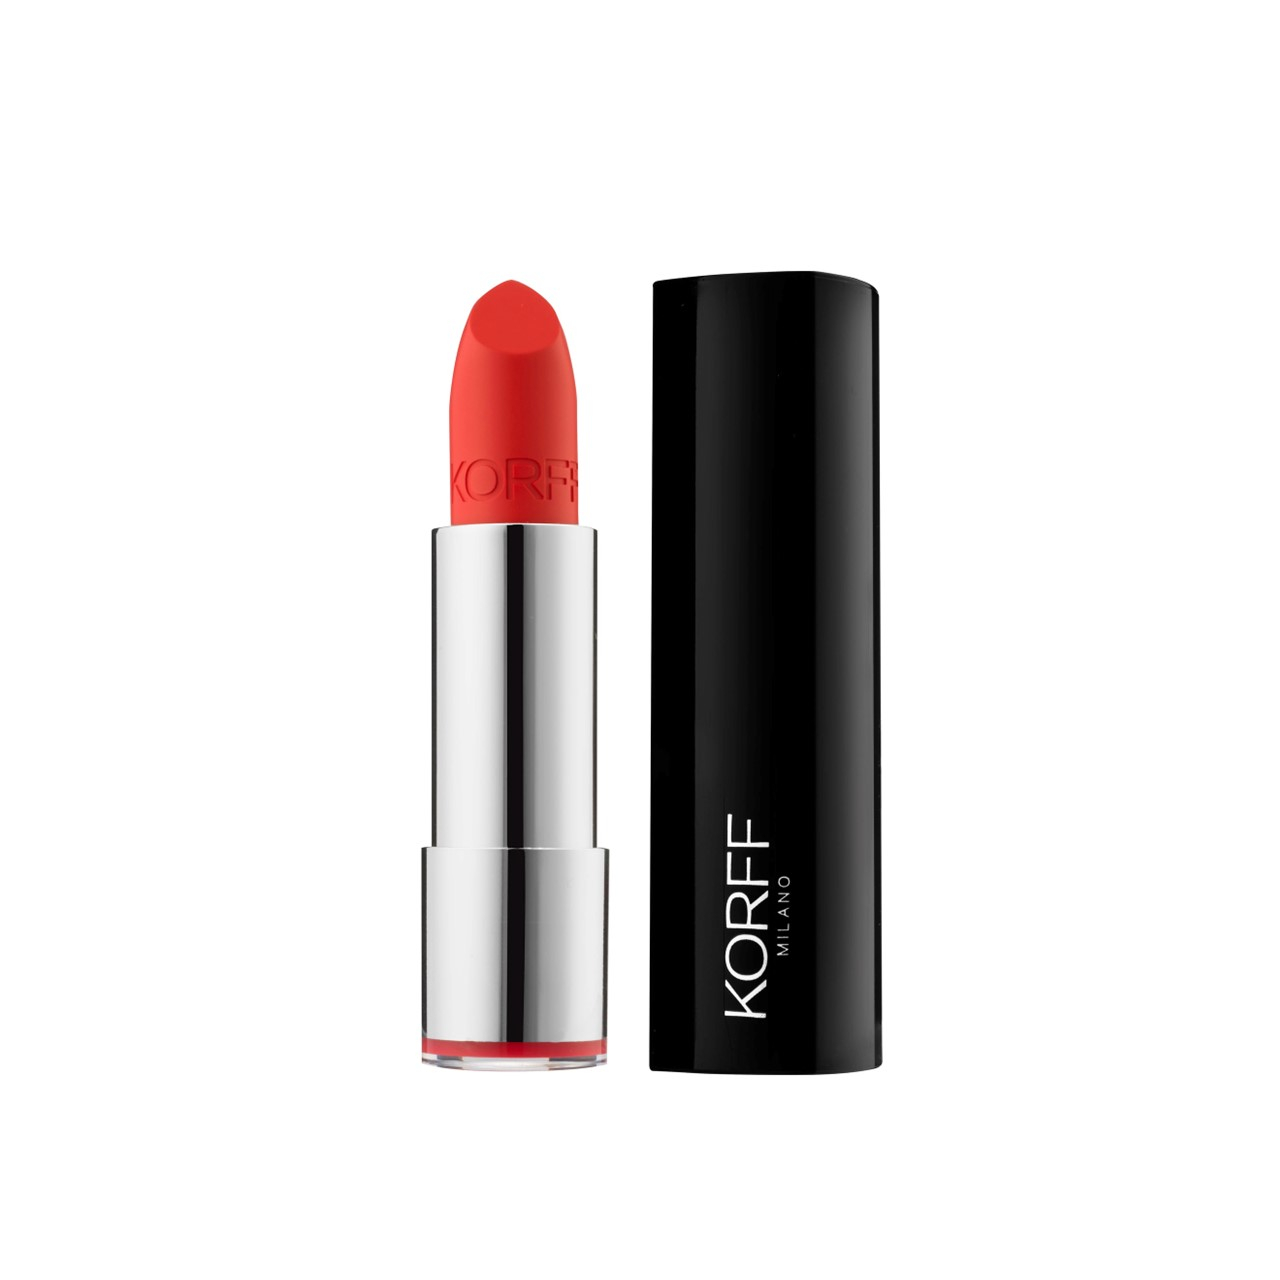 Korff Cure Make-Up Satin Lipstick 05 4ml (0.13 fl oz)